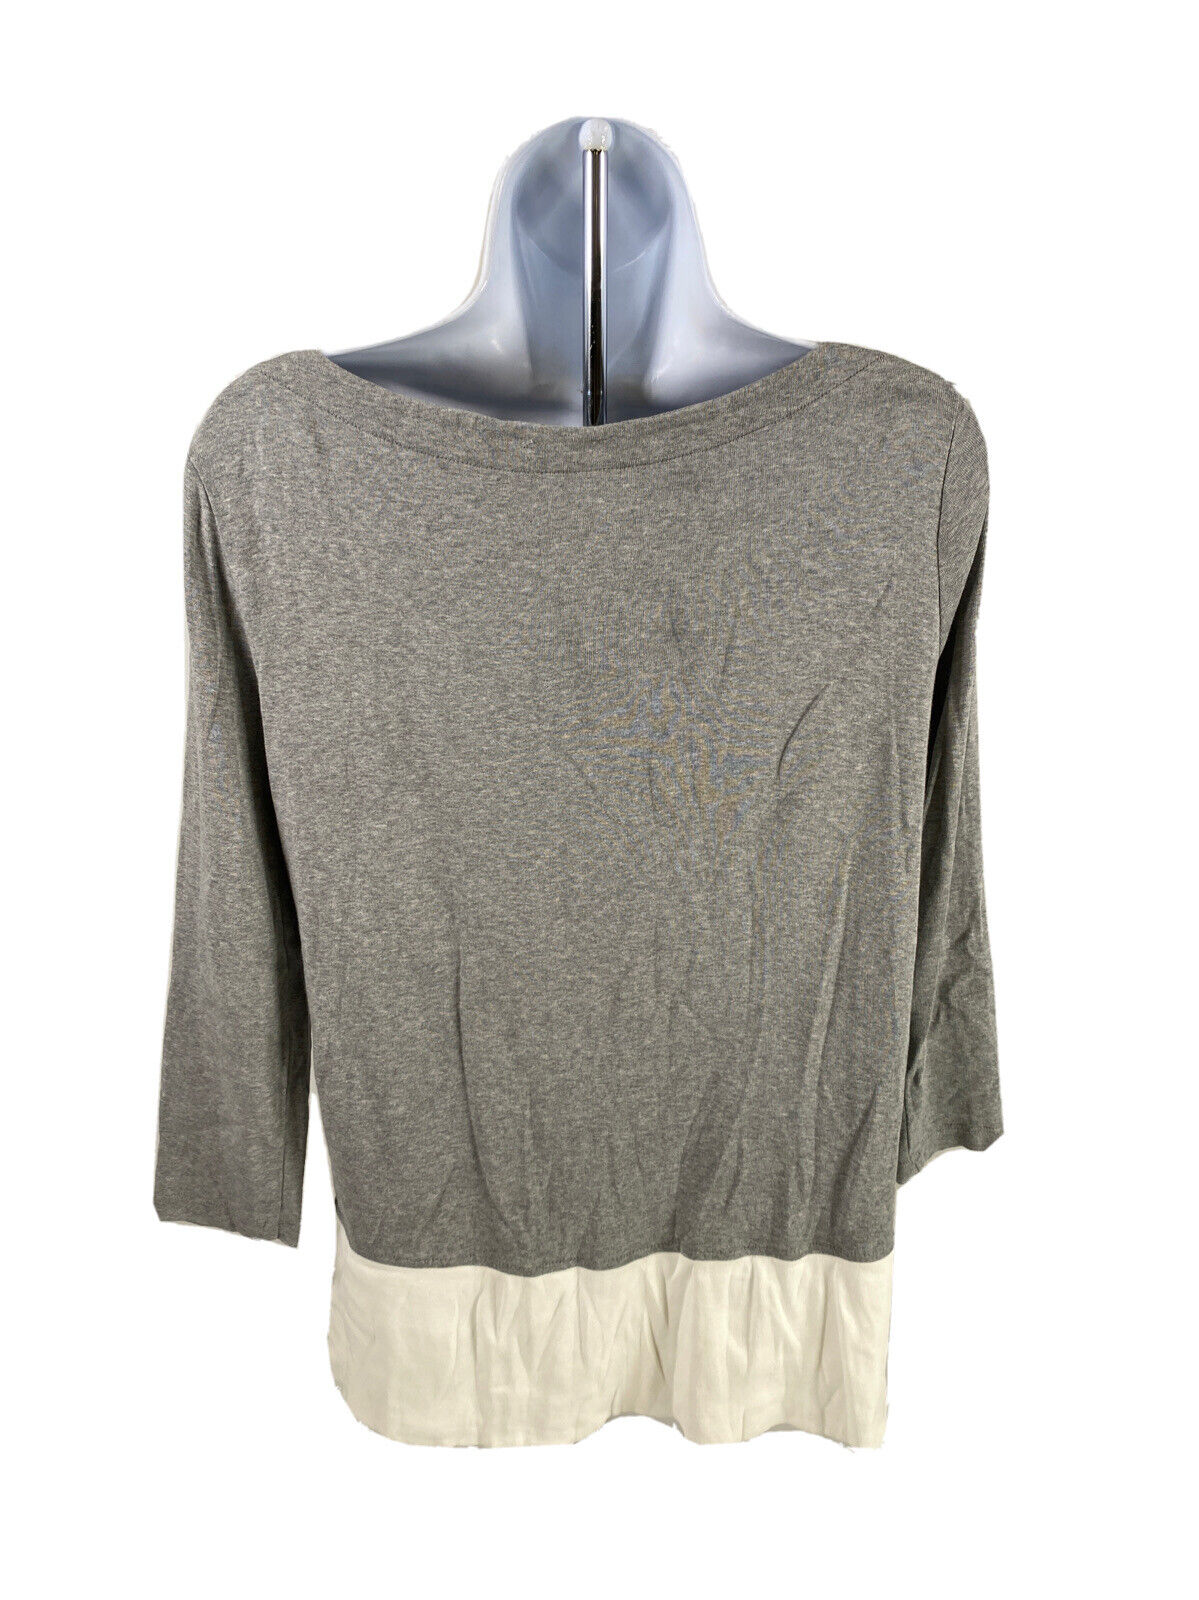 LOFT Women's Gray/White Layered Long Sleeve T-Shirt - M